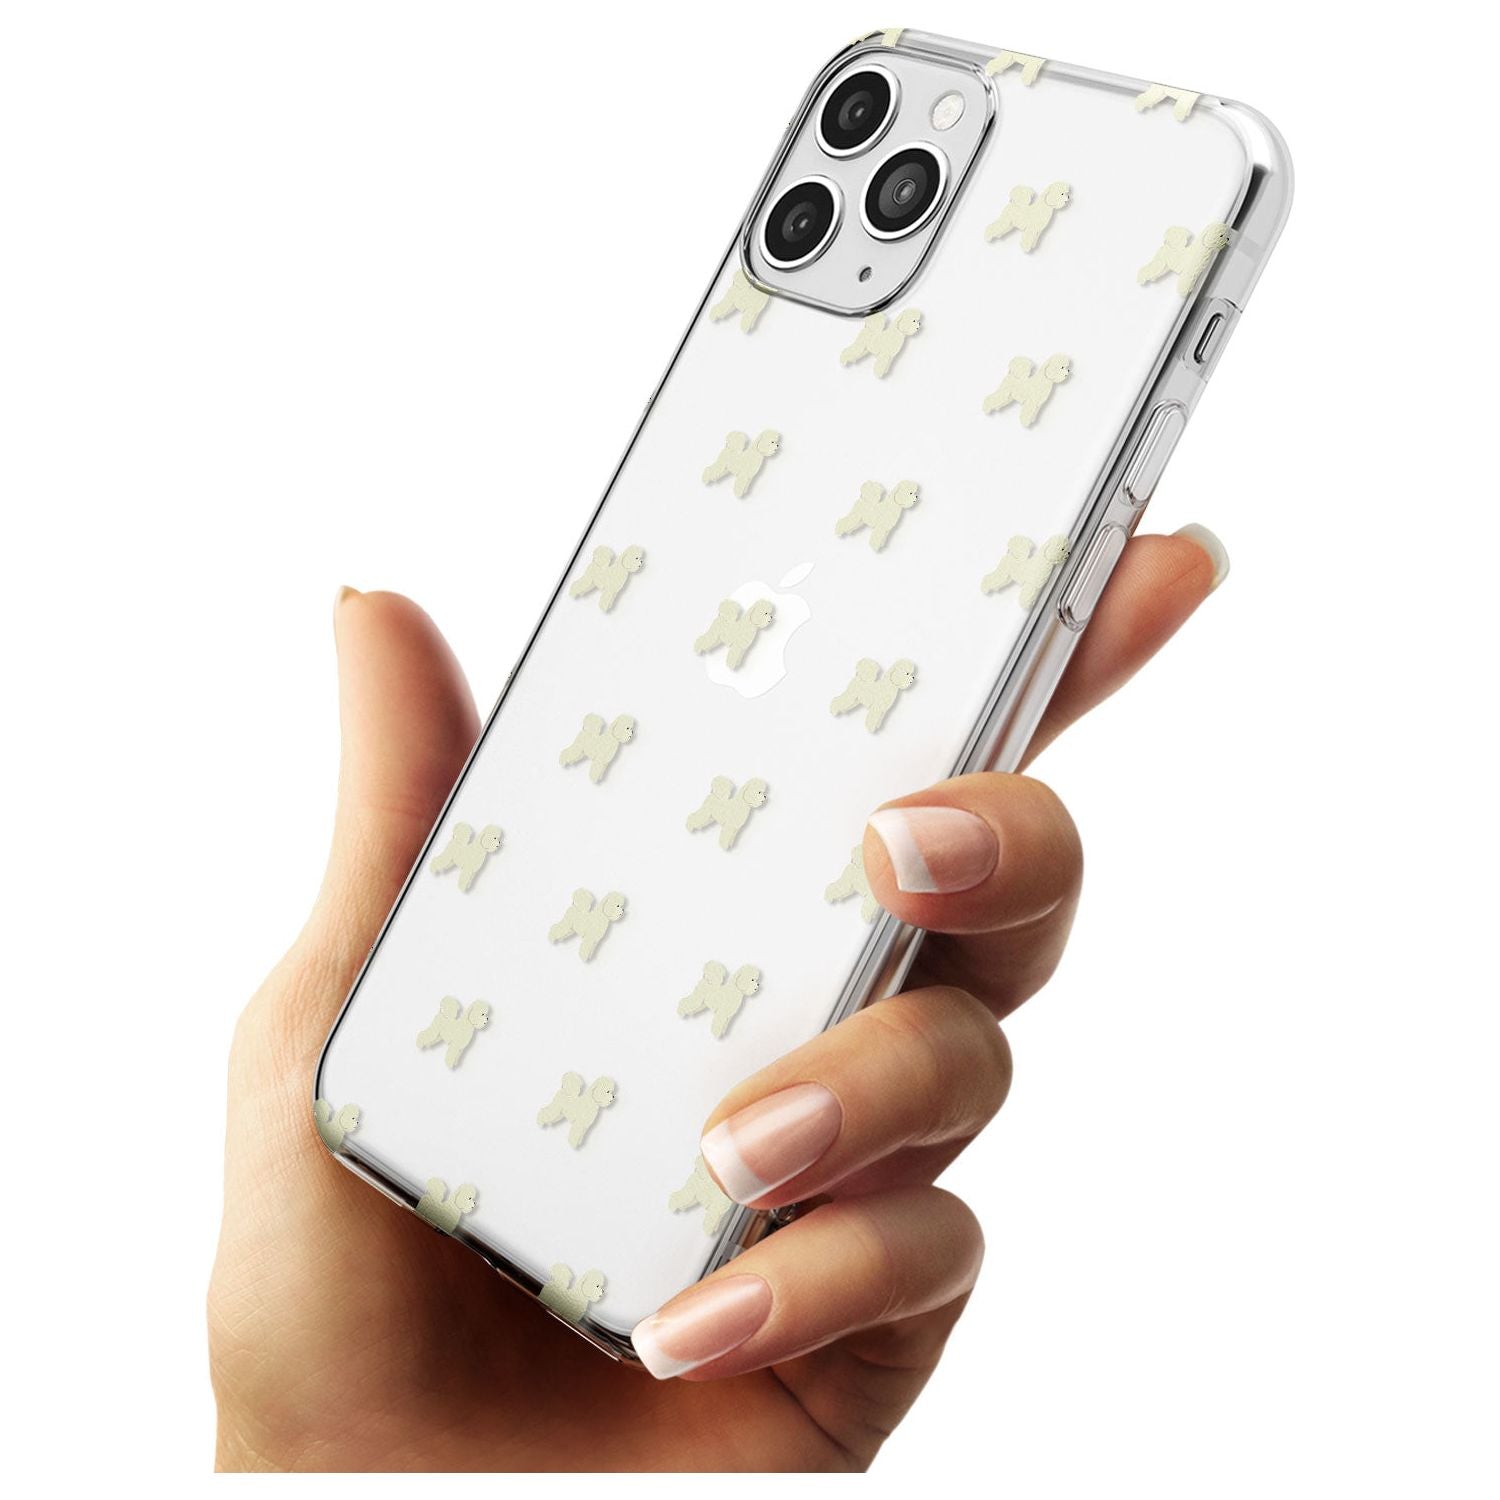 Bichon Frise Dog Pattern Clear Slim TPU Phone Case for iPhone 11 Pro Max